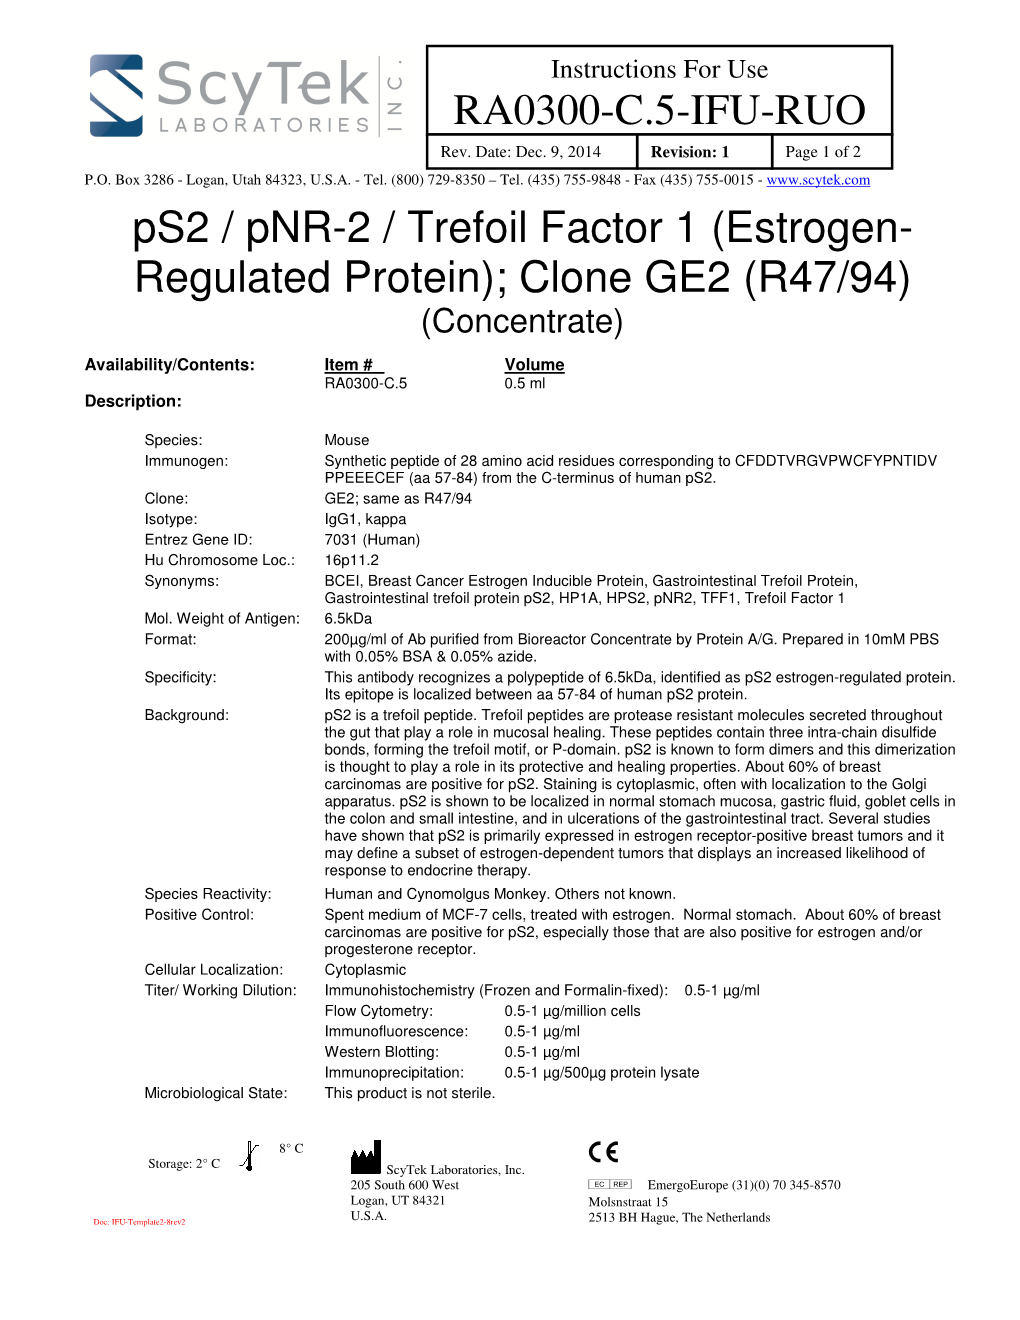 RA0300-C.5-IFU-RUO Ps2 / Pnr-2 / Trefoil Factor 1 (Estrogen